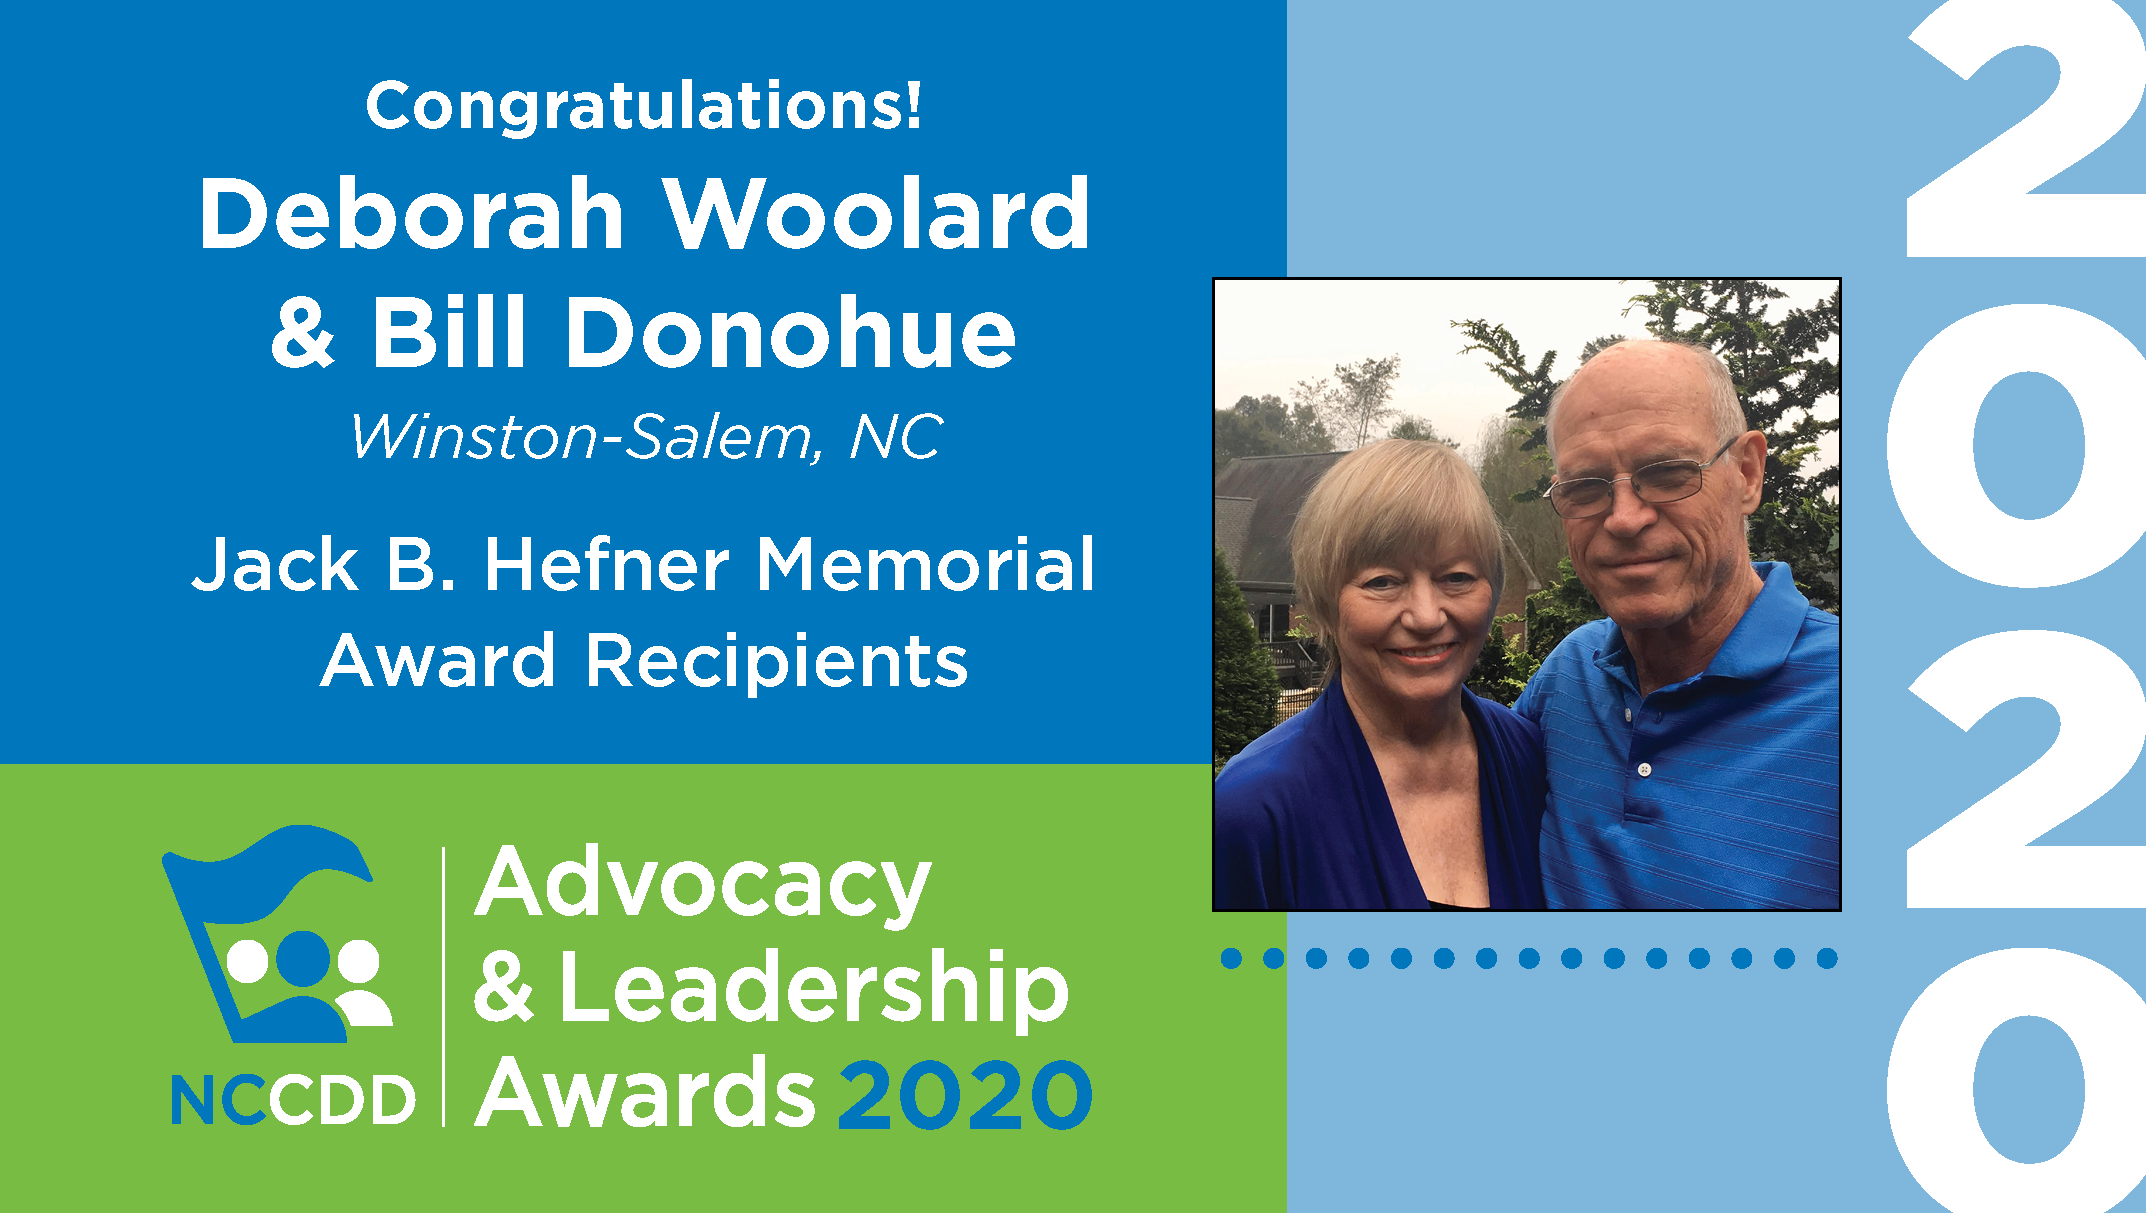 Jack B. Hefner Memorial Award recipients Deborah Woolard and Bill Donohue 